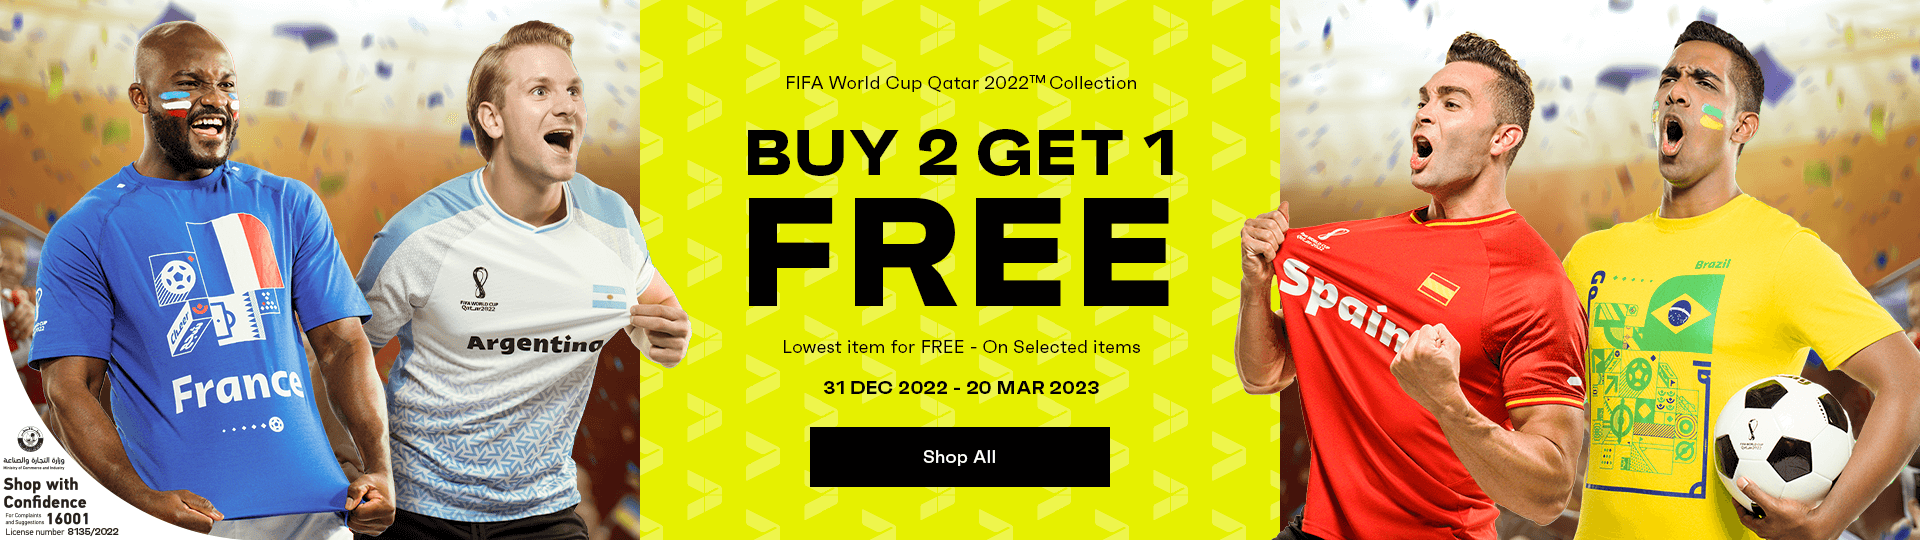 buy-2-get-1-free-fifa